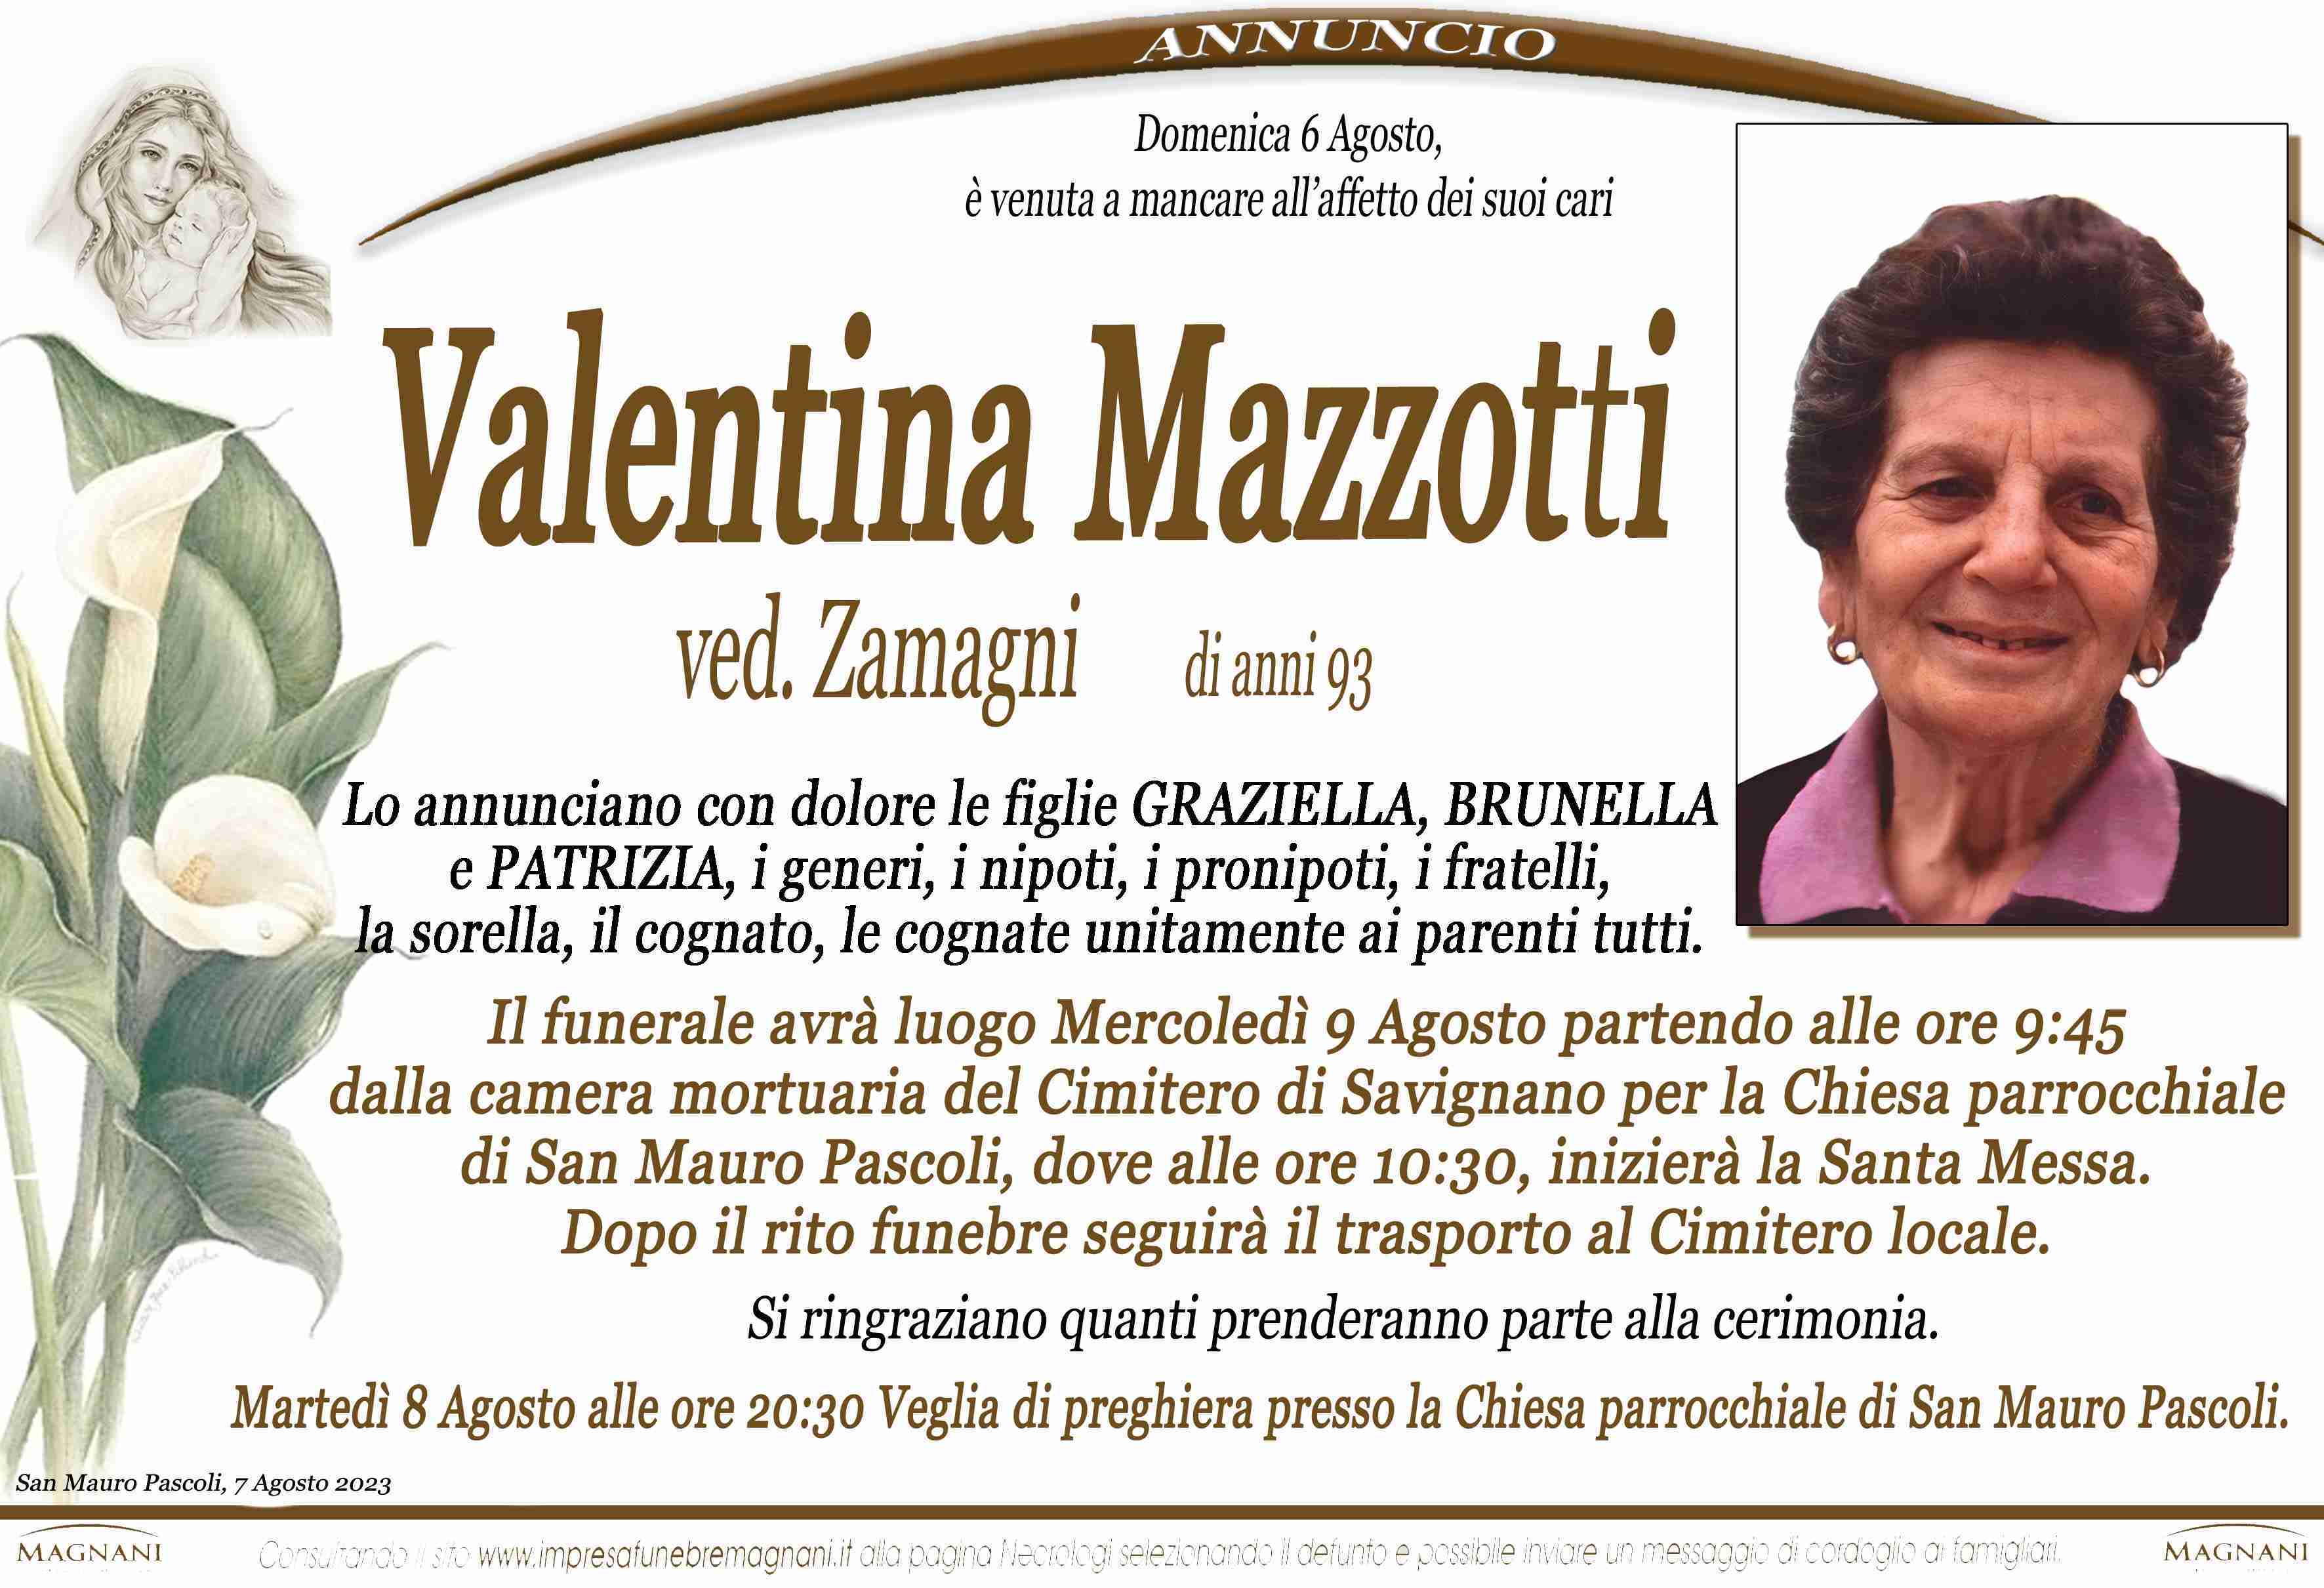 Valentina Mazzotti